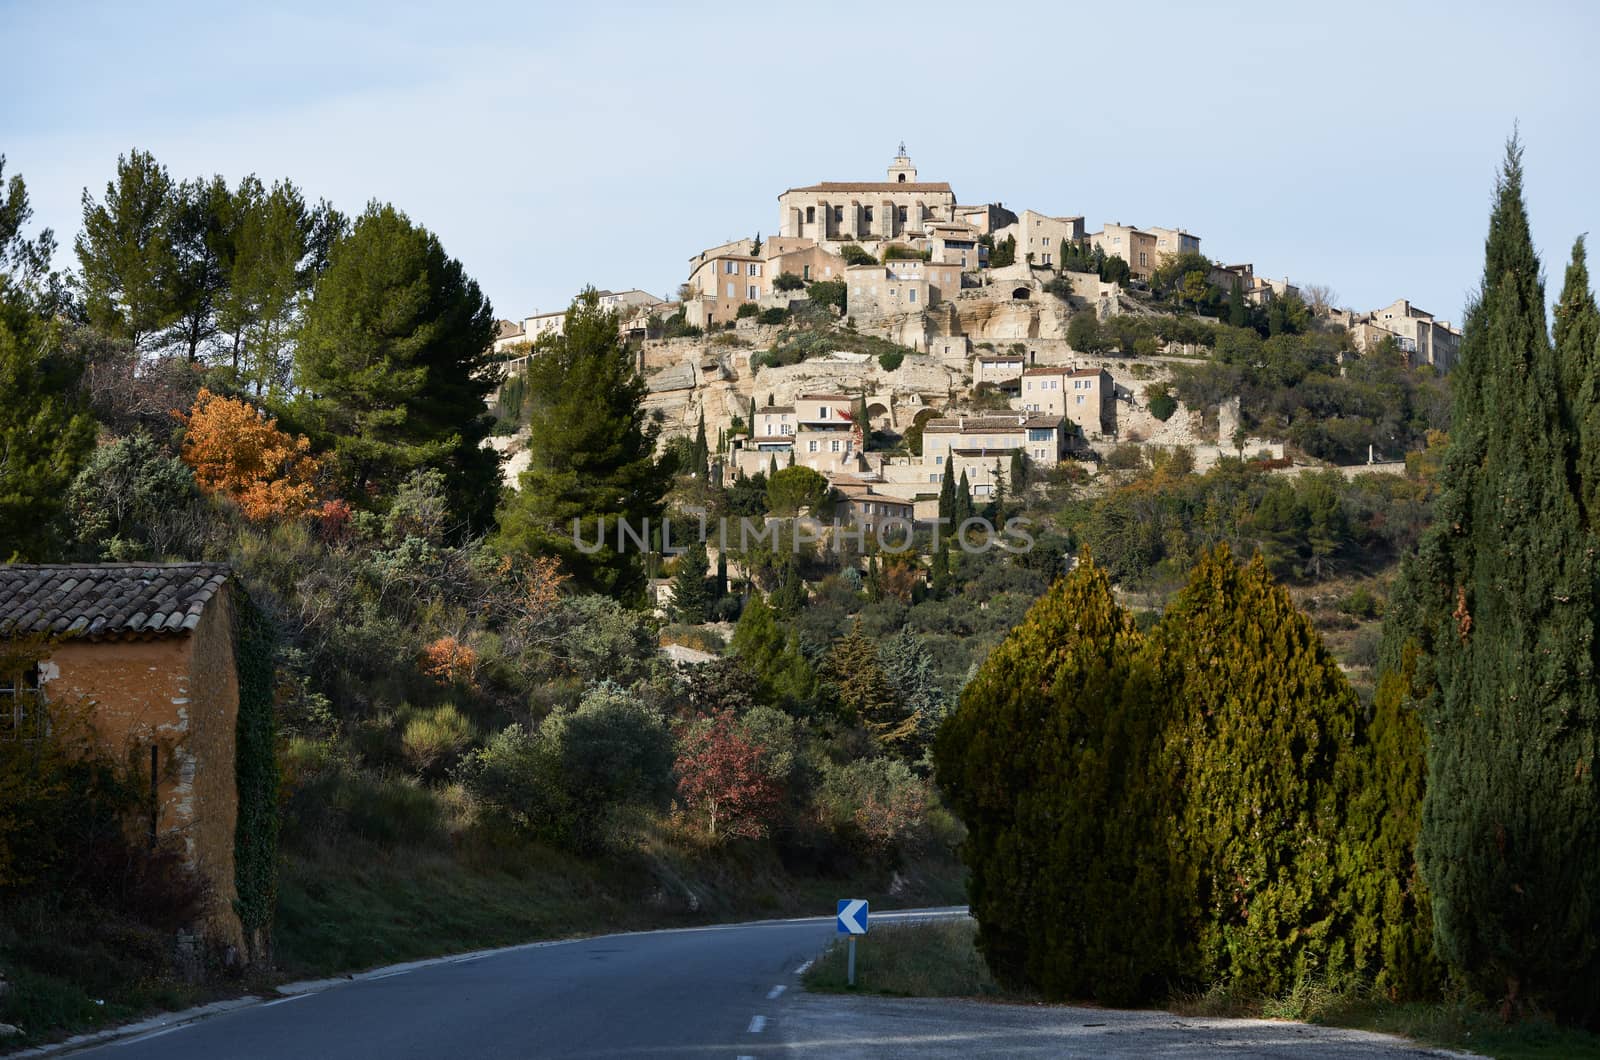 Provence Medieval village of Gordes in Luberon region, France